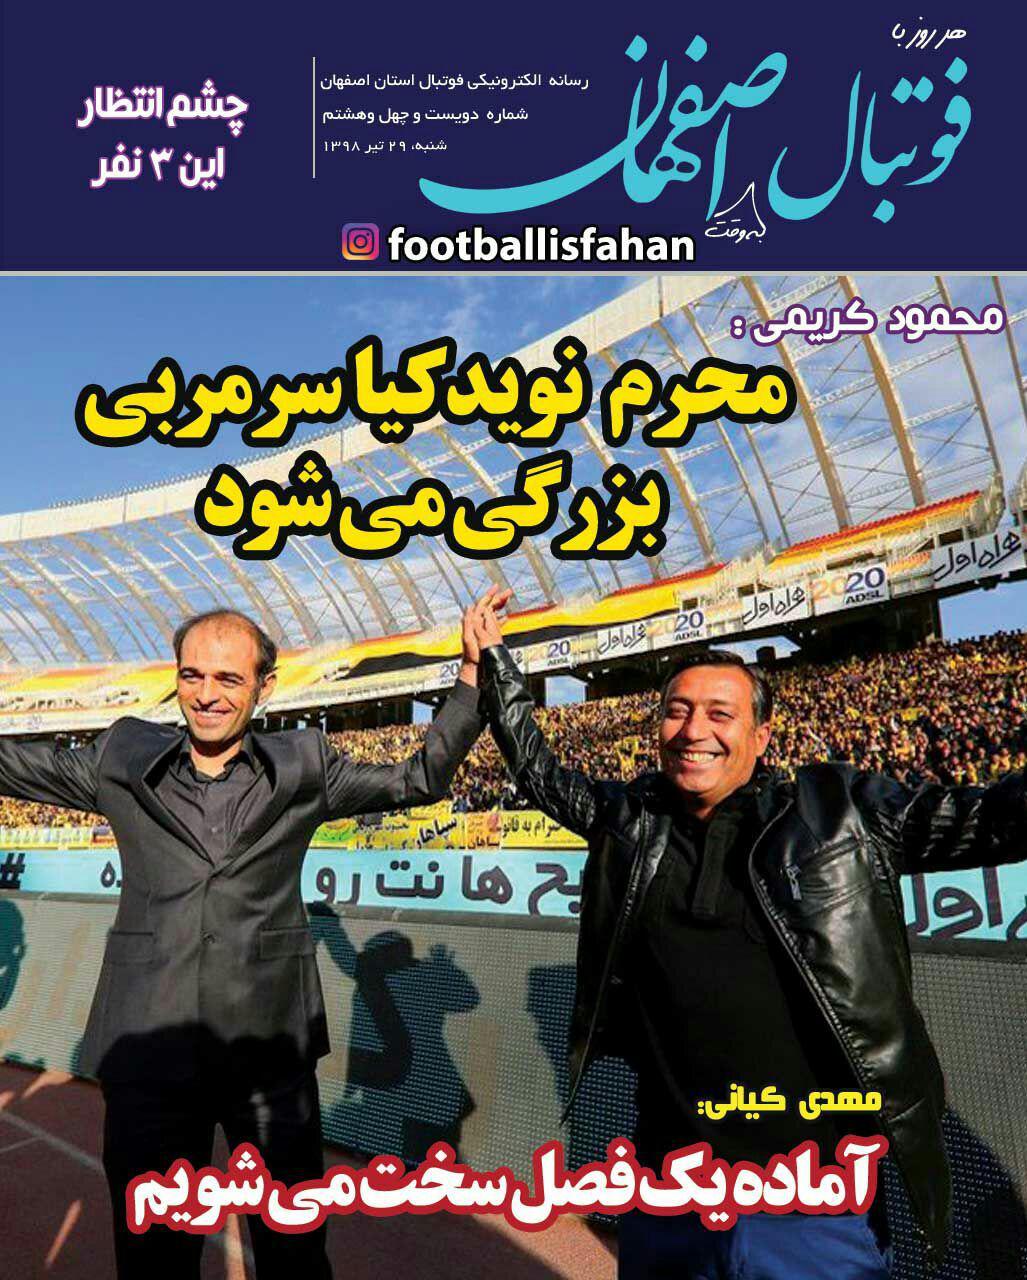 روزنامه فوتبال اصفهان